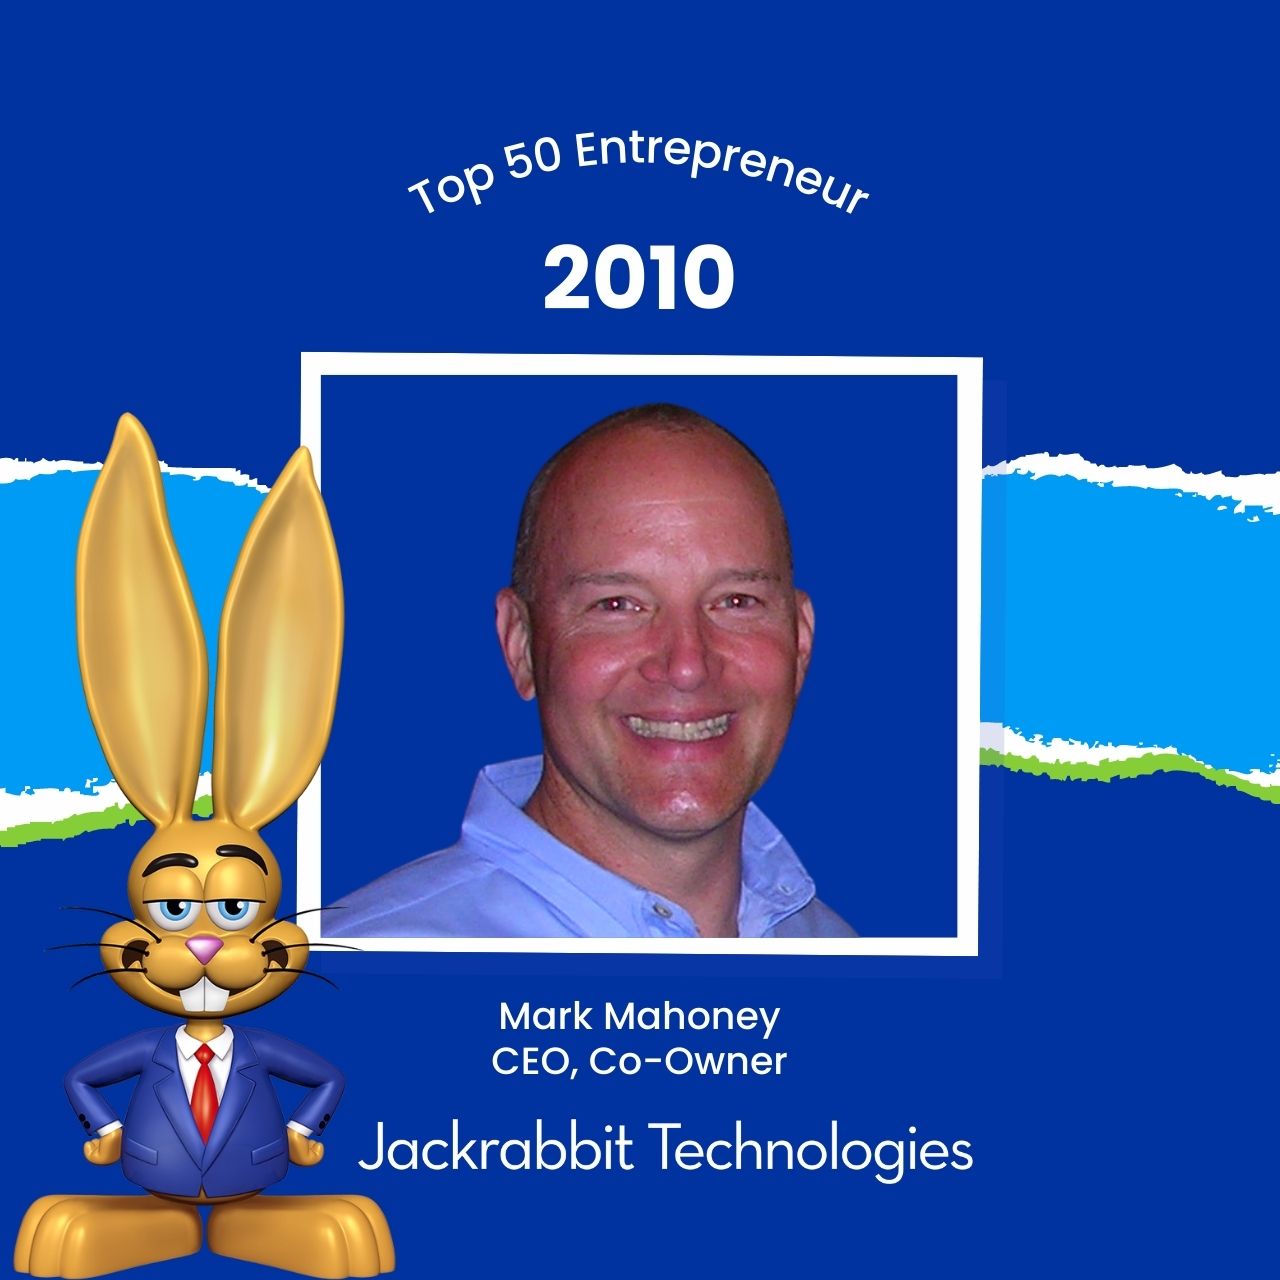 mark mahoney 2010 top 50 entrepreneur